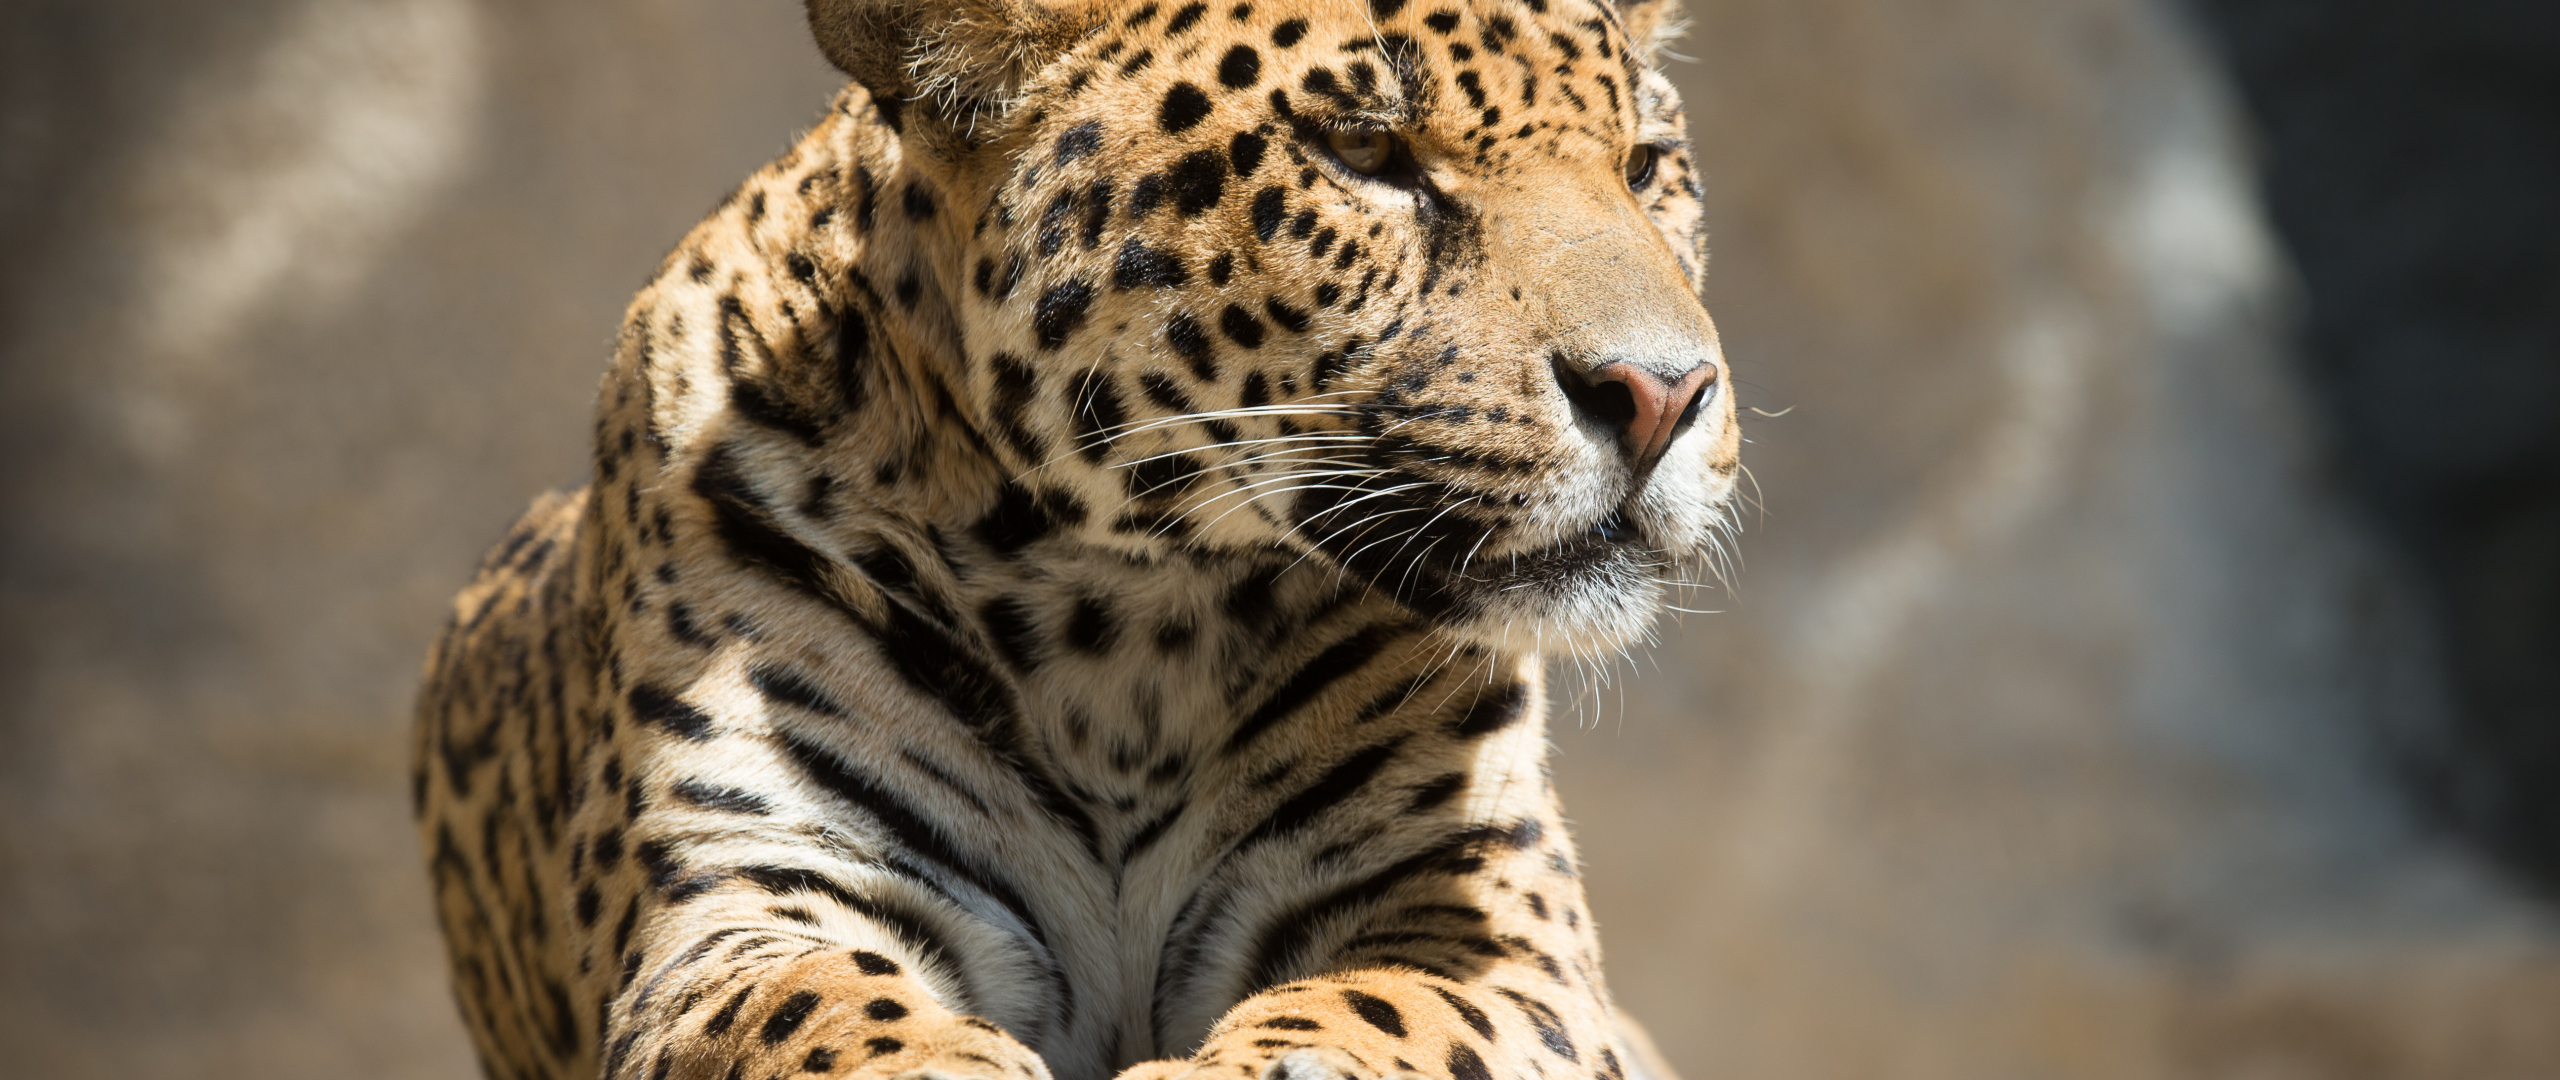 Desktop Wallpaper Jaguar Animal Hd Image Picture Background Hspipe